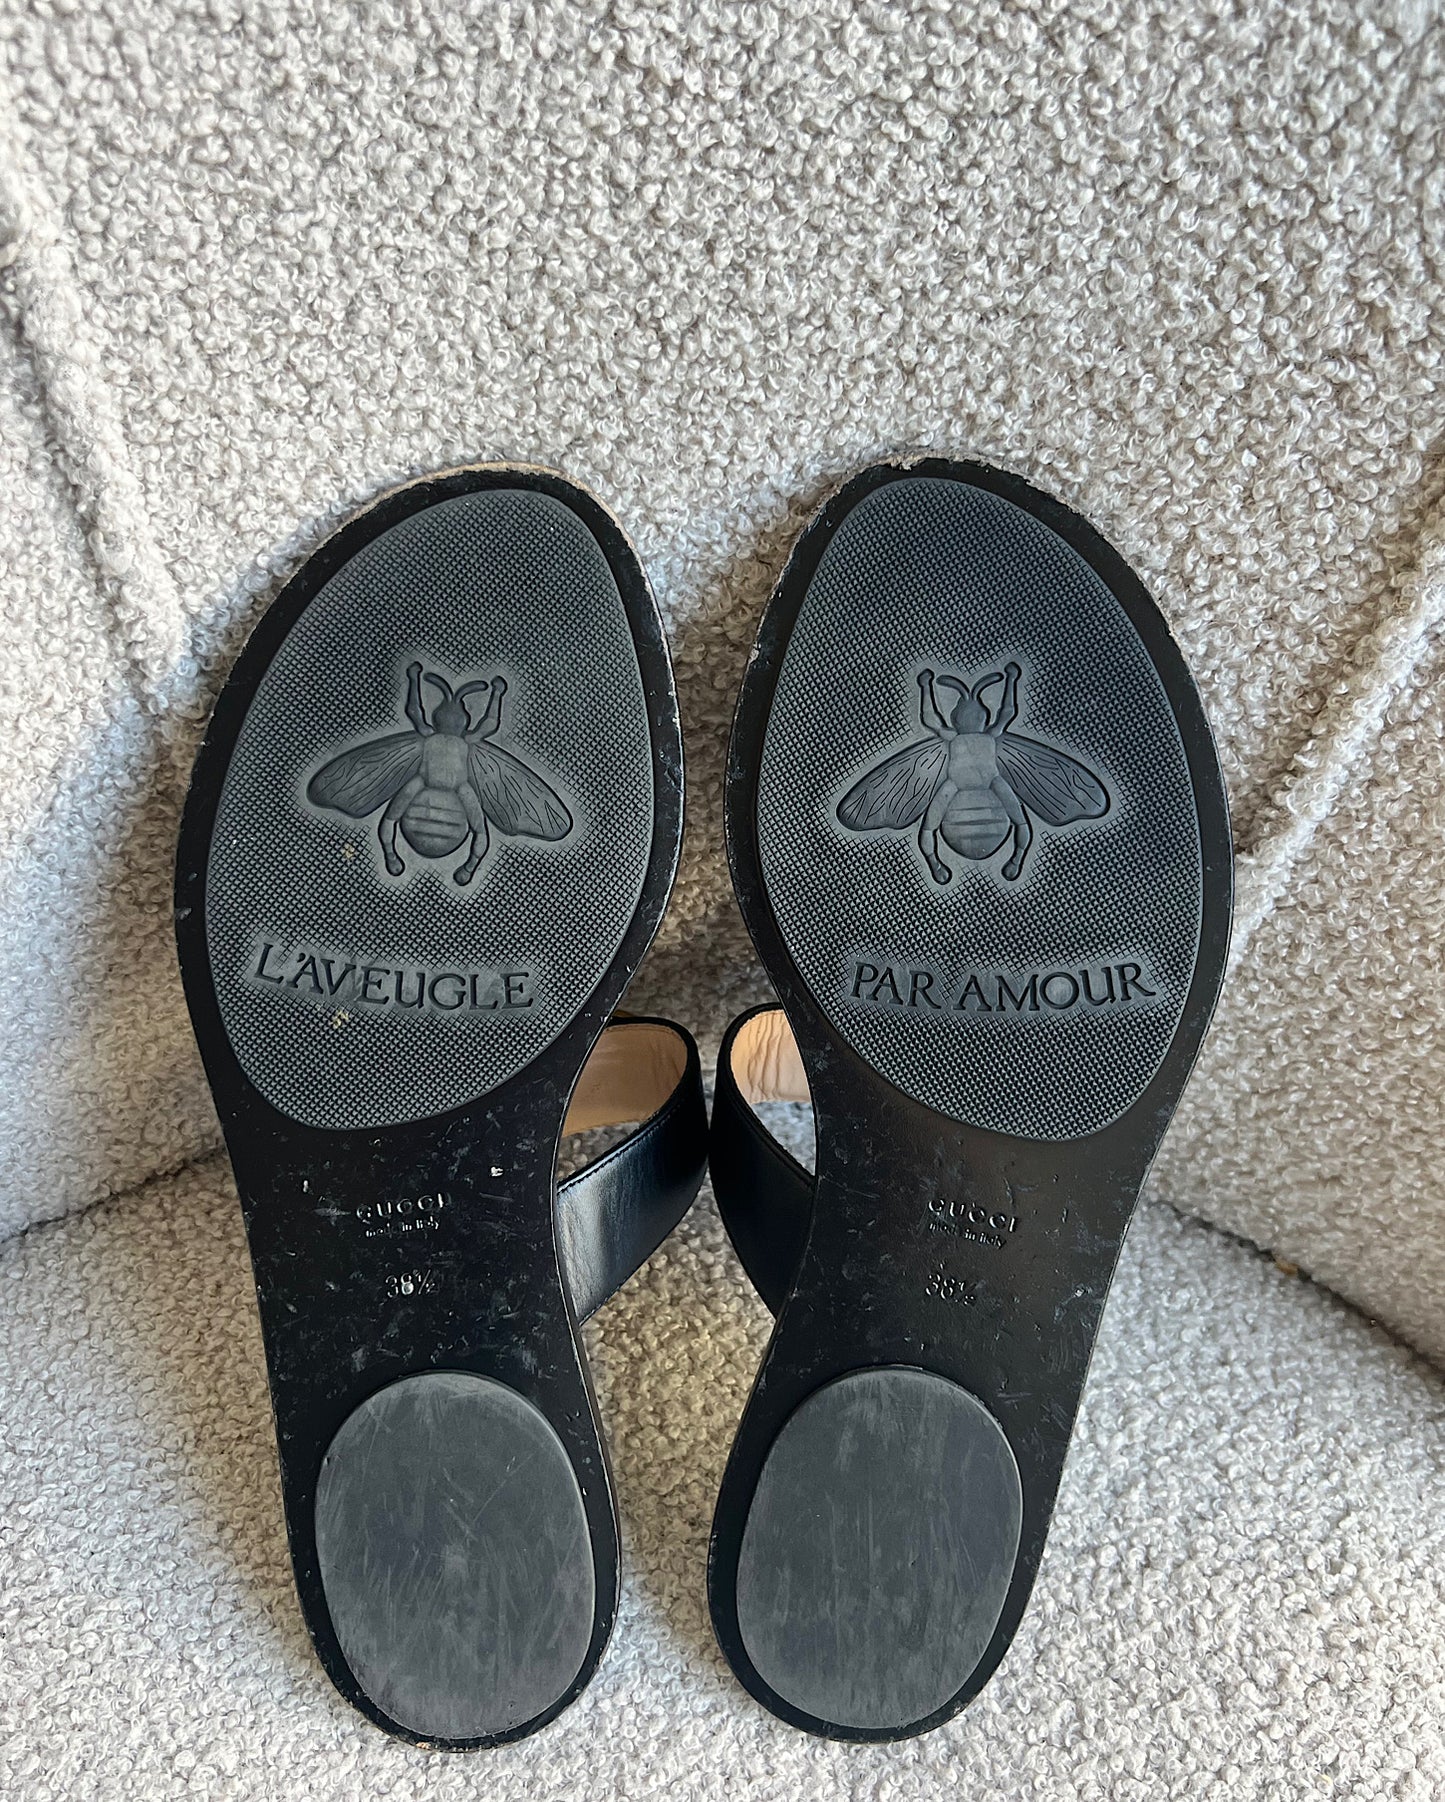 Black GG Sandals ~ Size 38.5/5.5